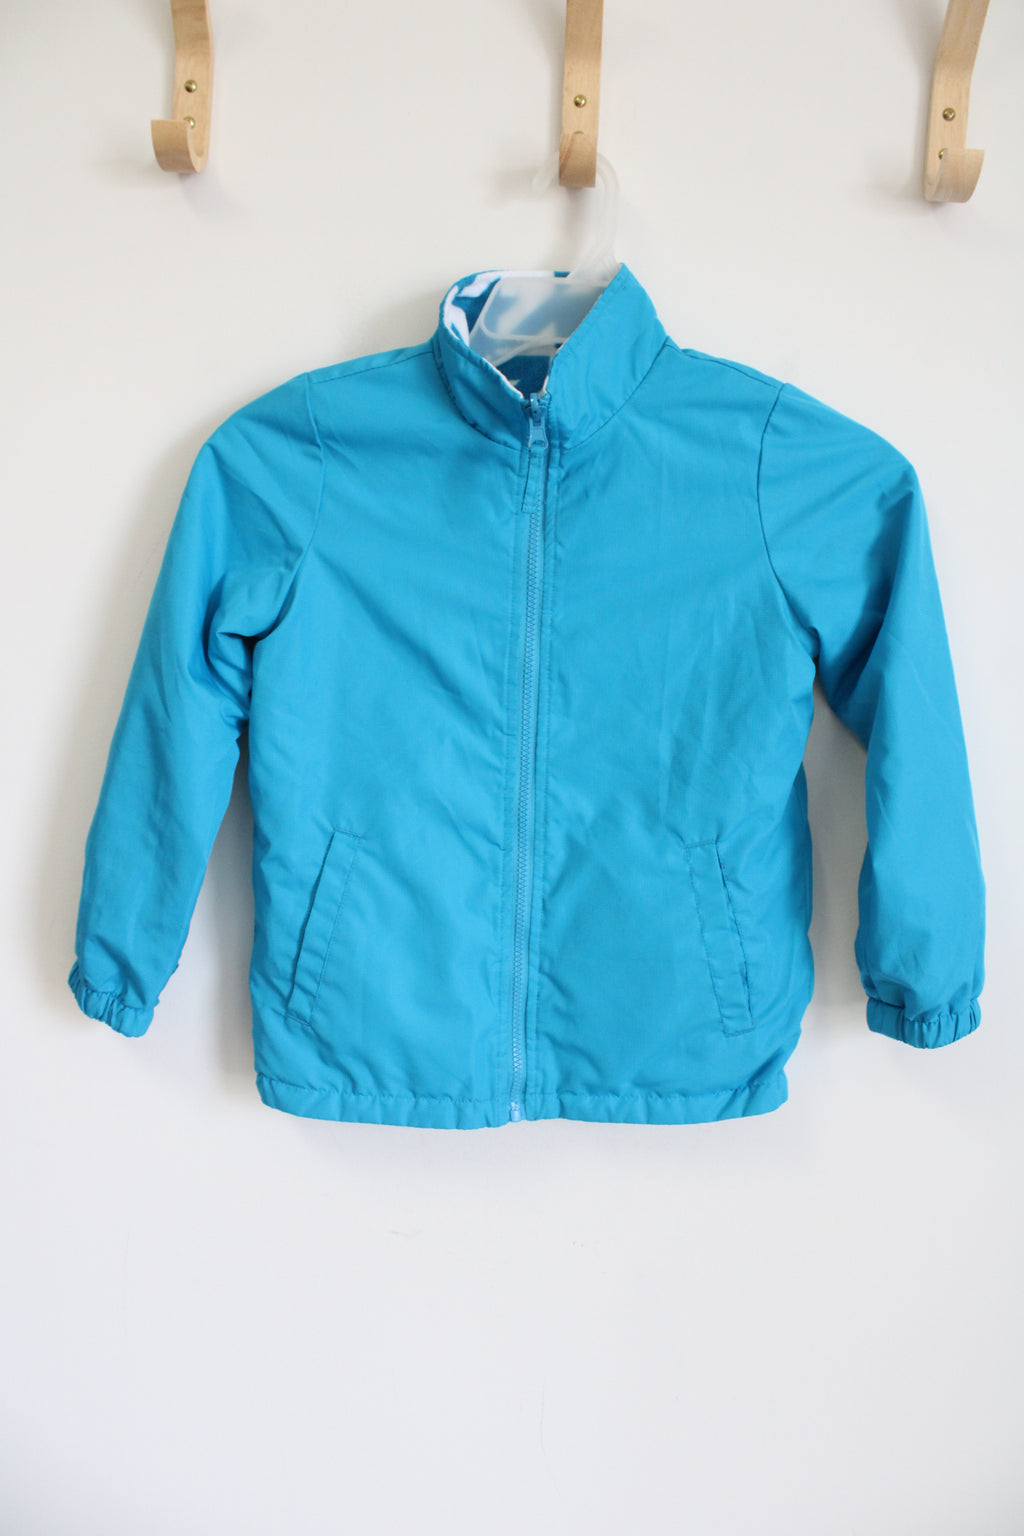 Athletech Blue Fleece Reversible Jacket | Youth M (7/8)